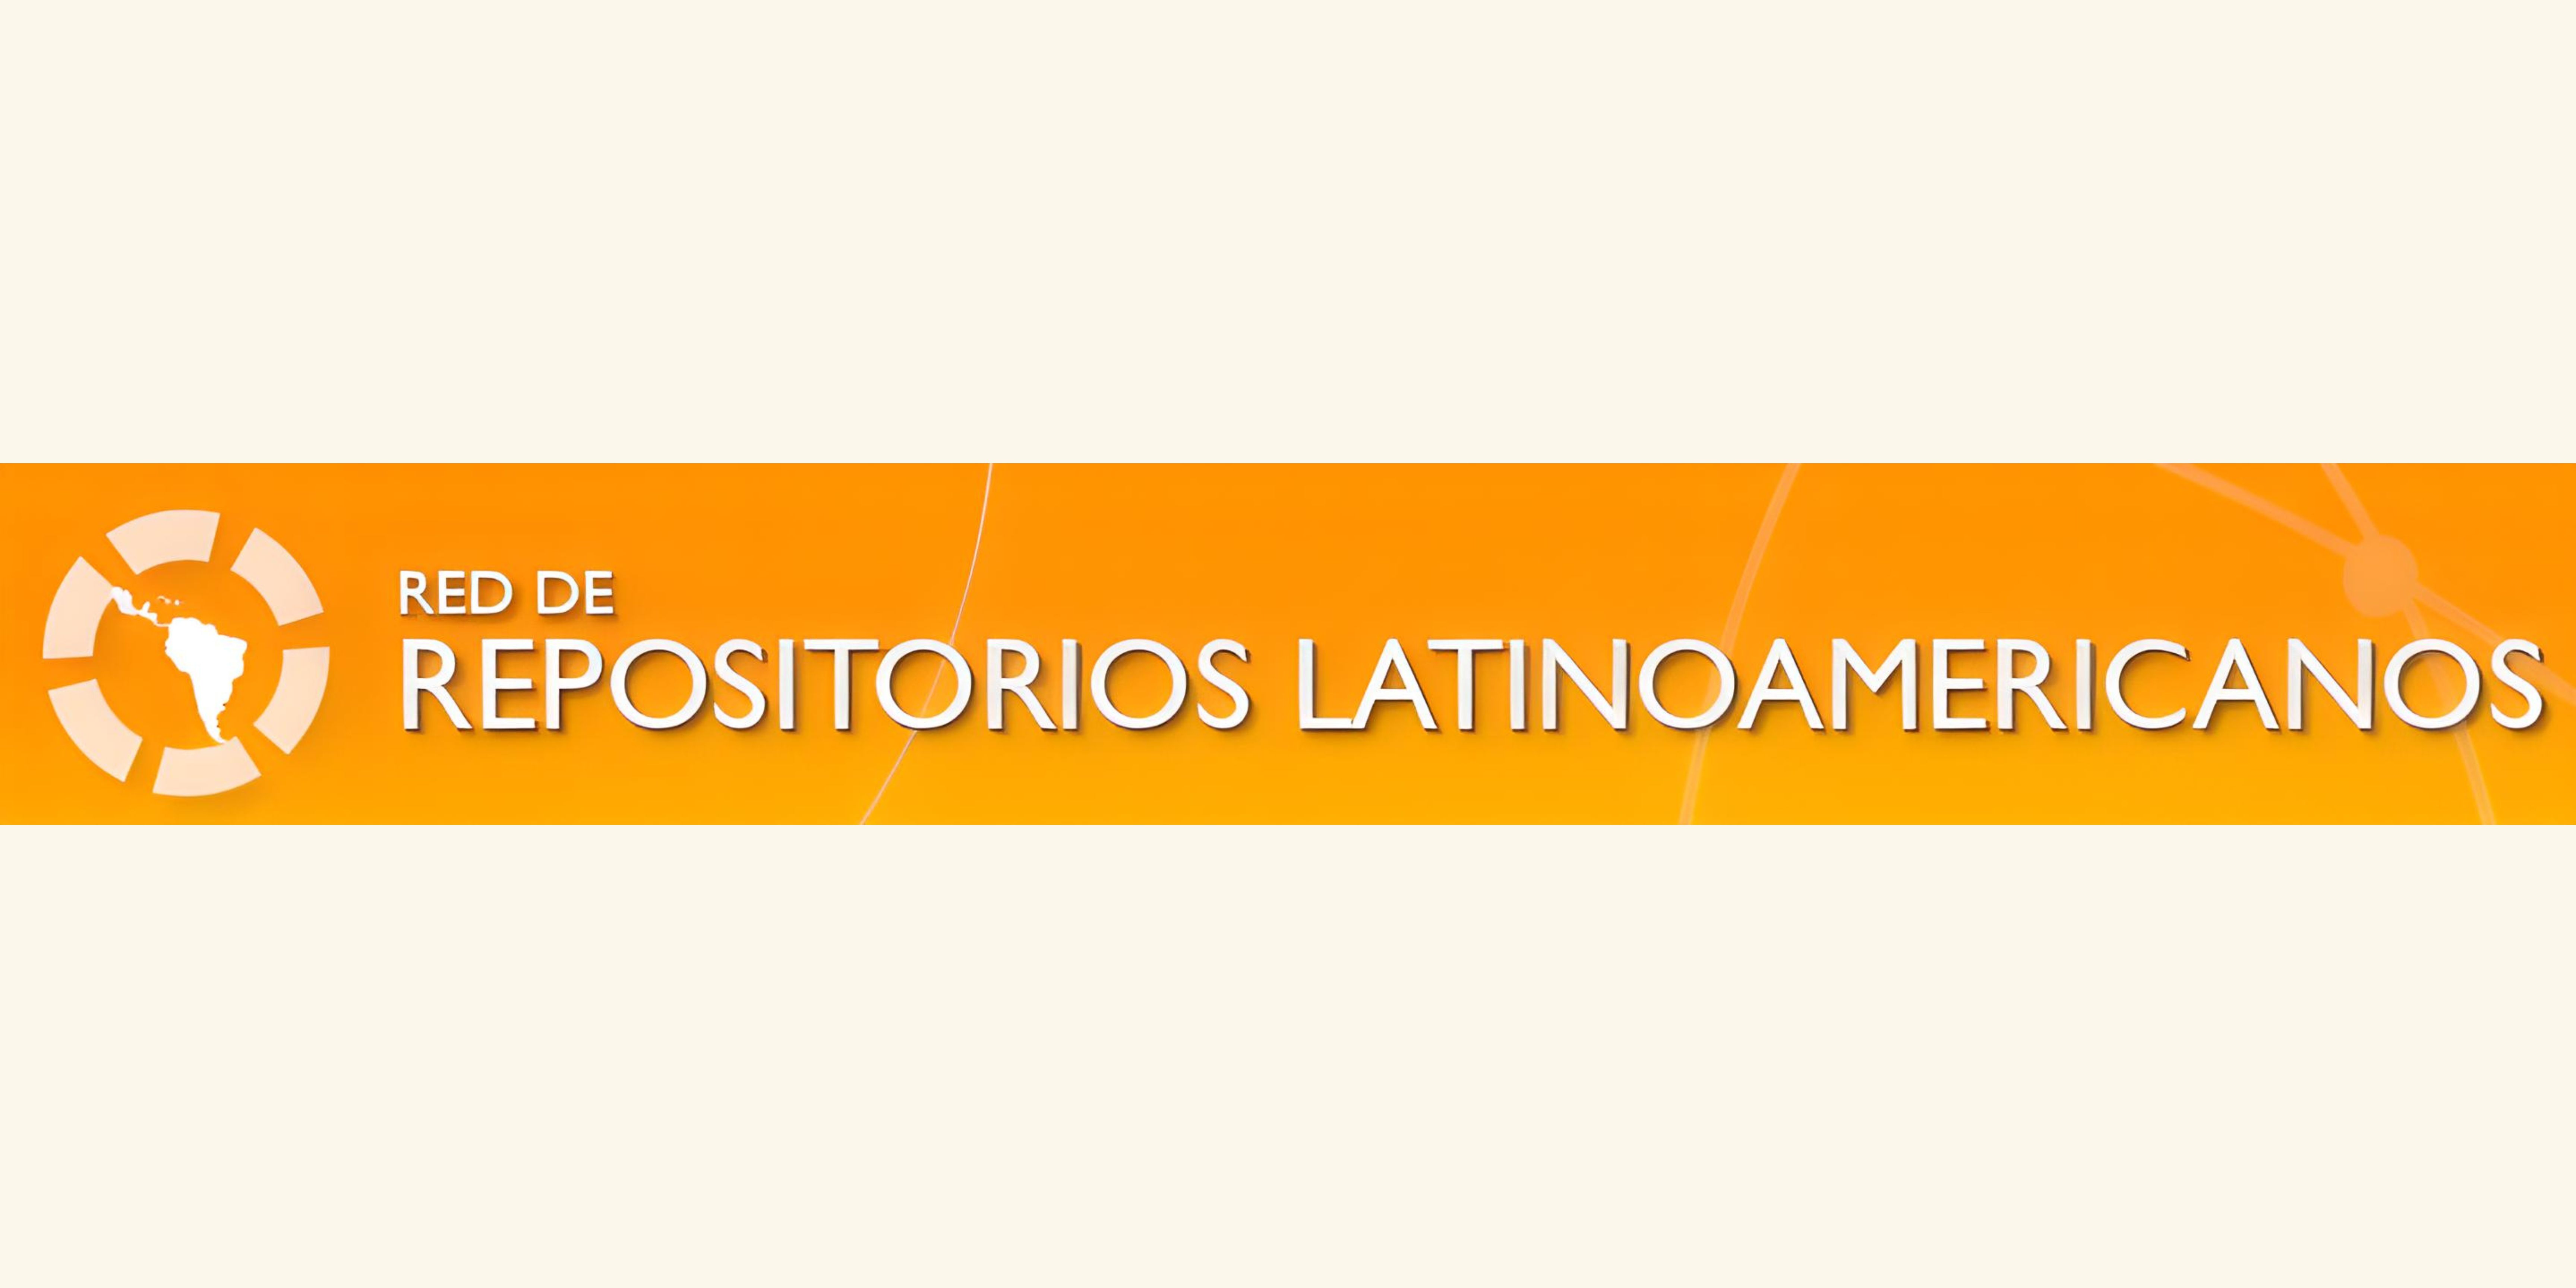 Red de Repositorios Latinoamericanos